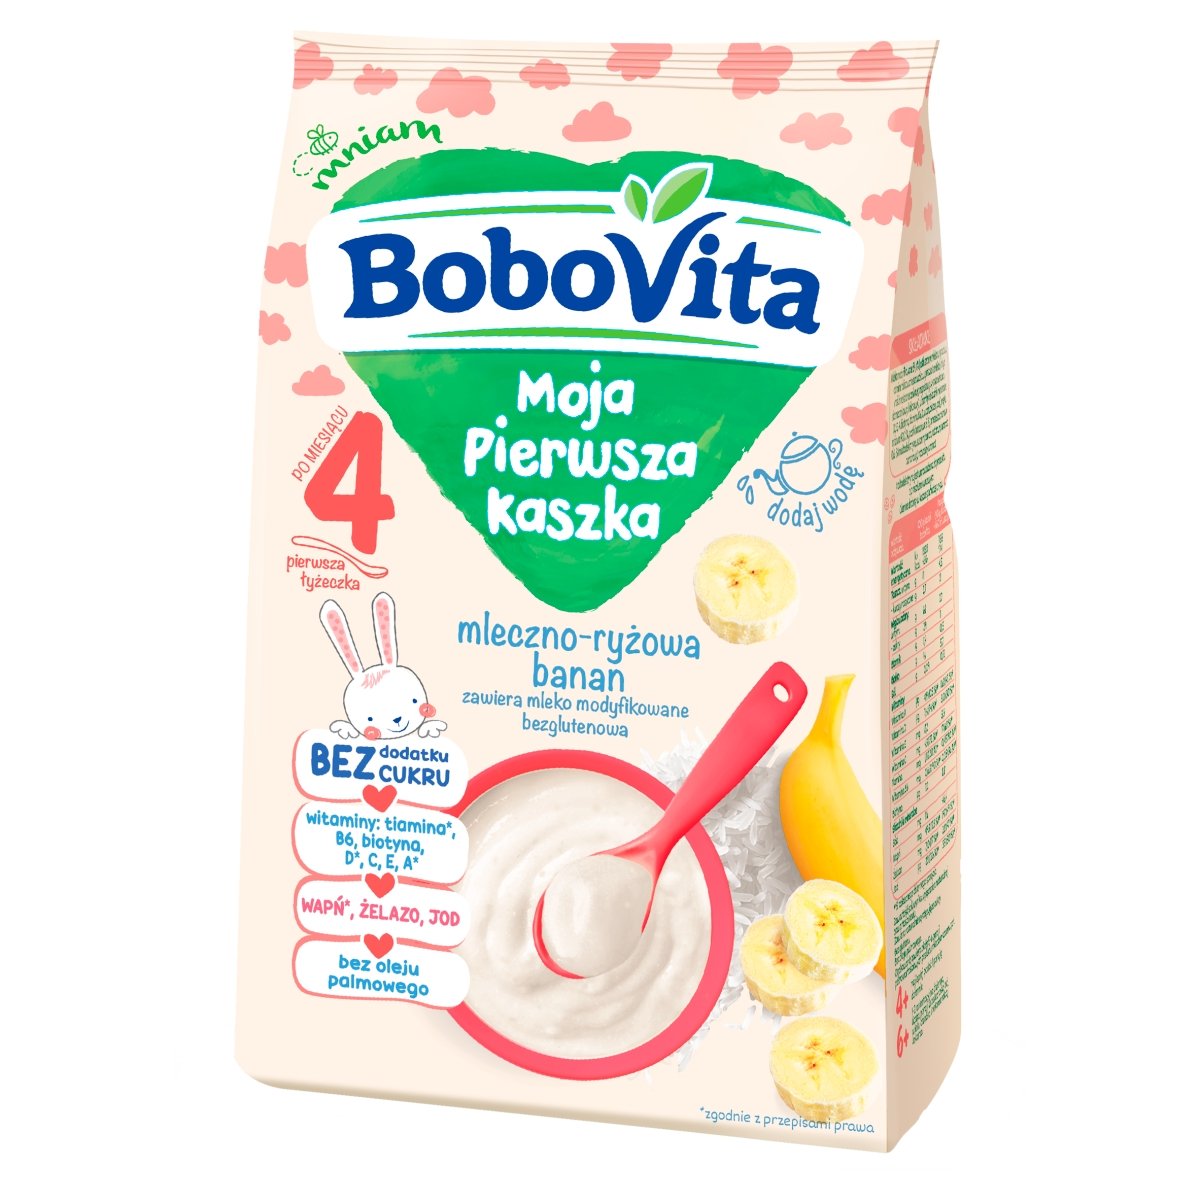 Nutricia BOBOVITA BoboVita Moja Pierwsza Kaszka mleczno-ryżowa banan, 230g